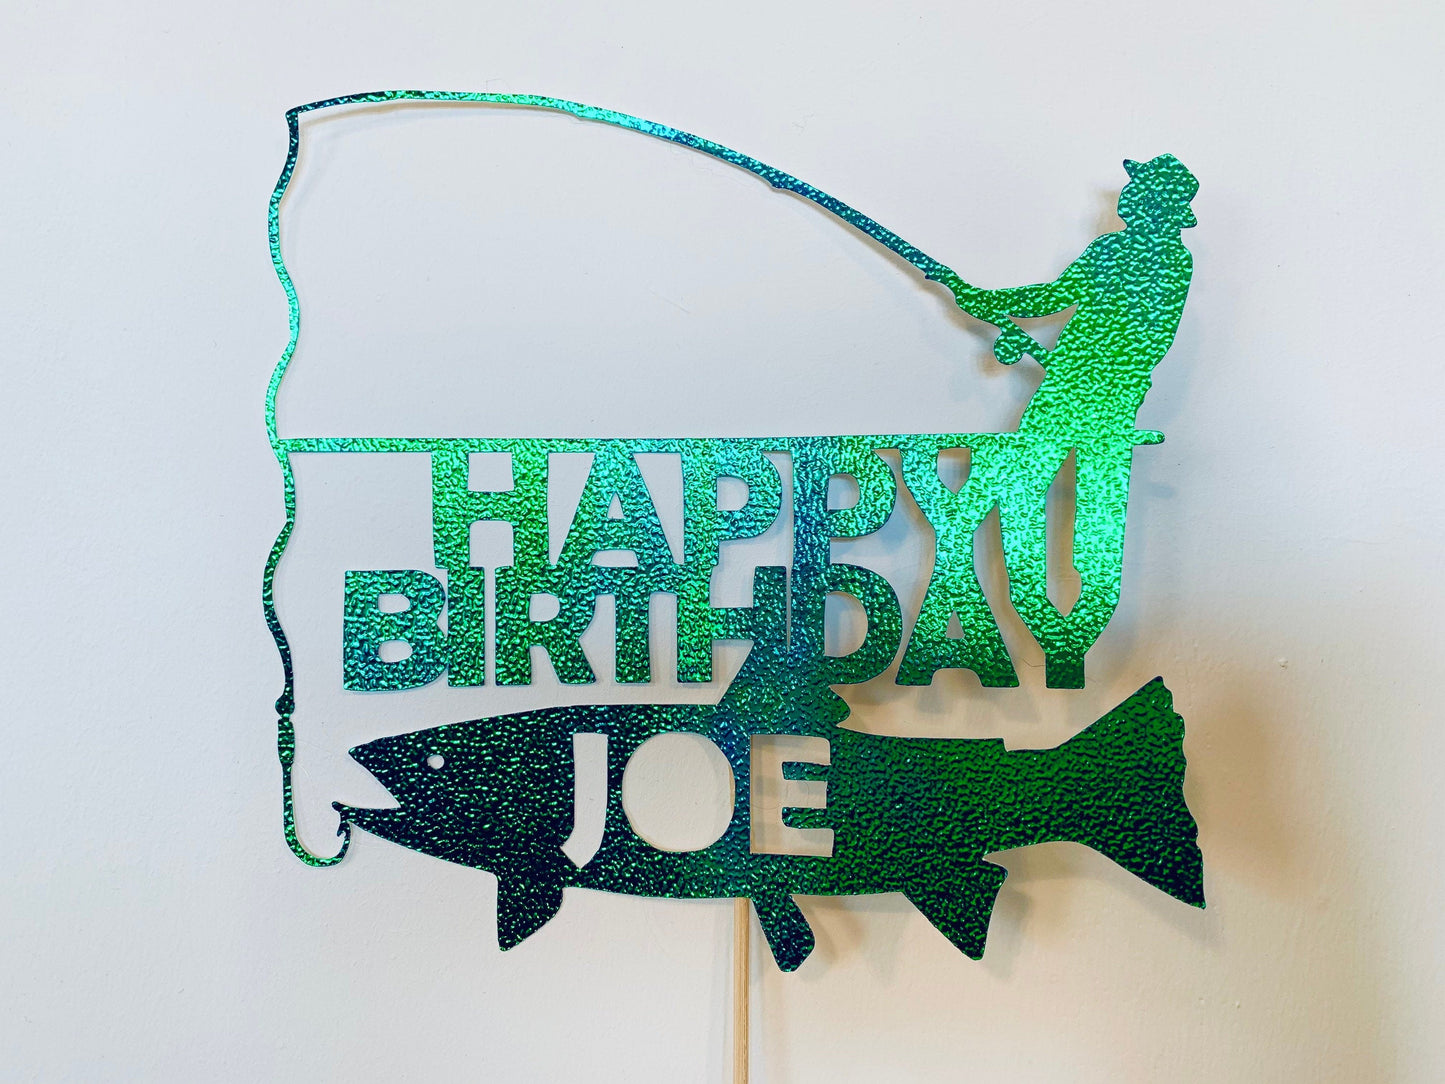 Personalised Fishing Happy Birthday cake topper - Resplendent Aurora